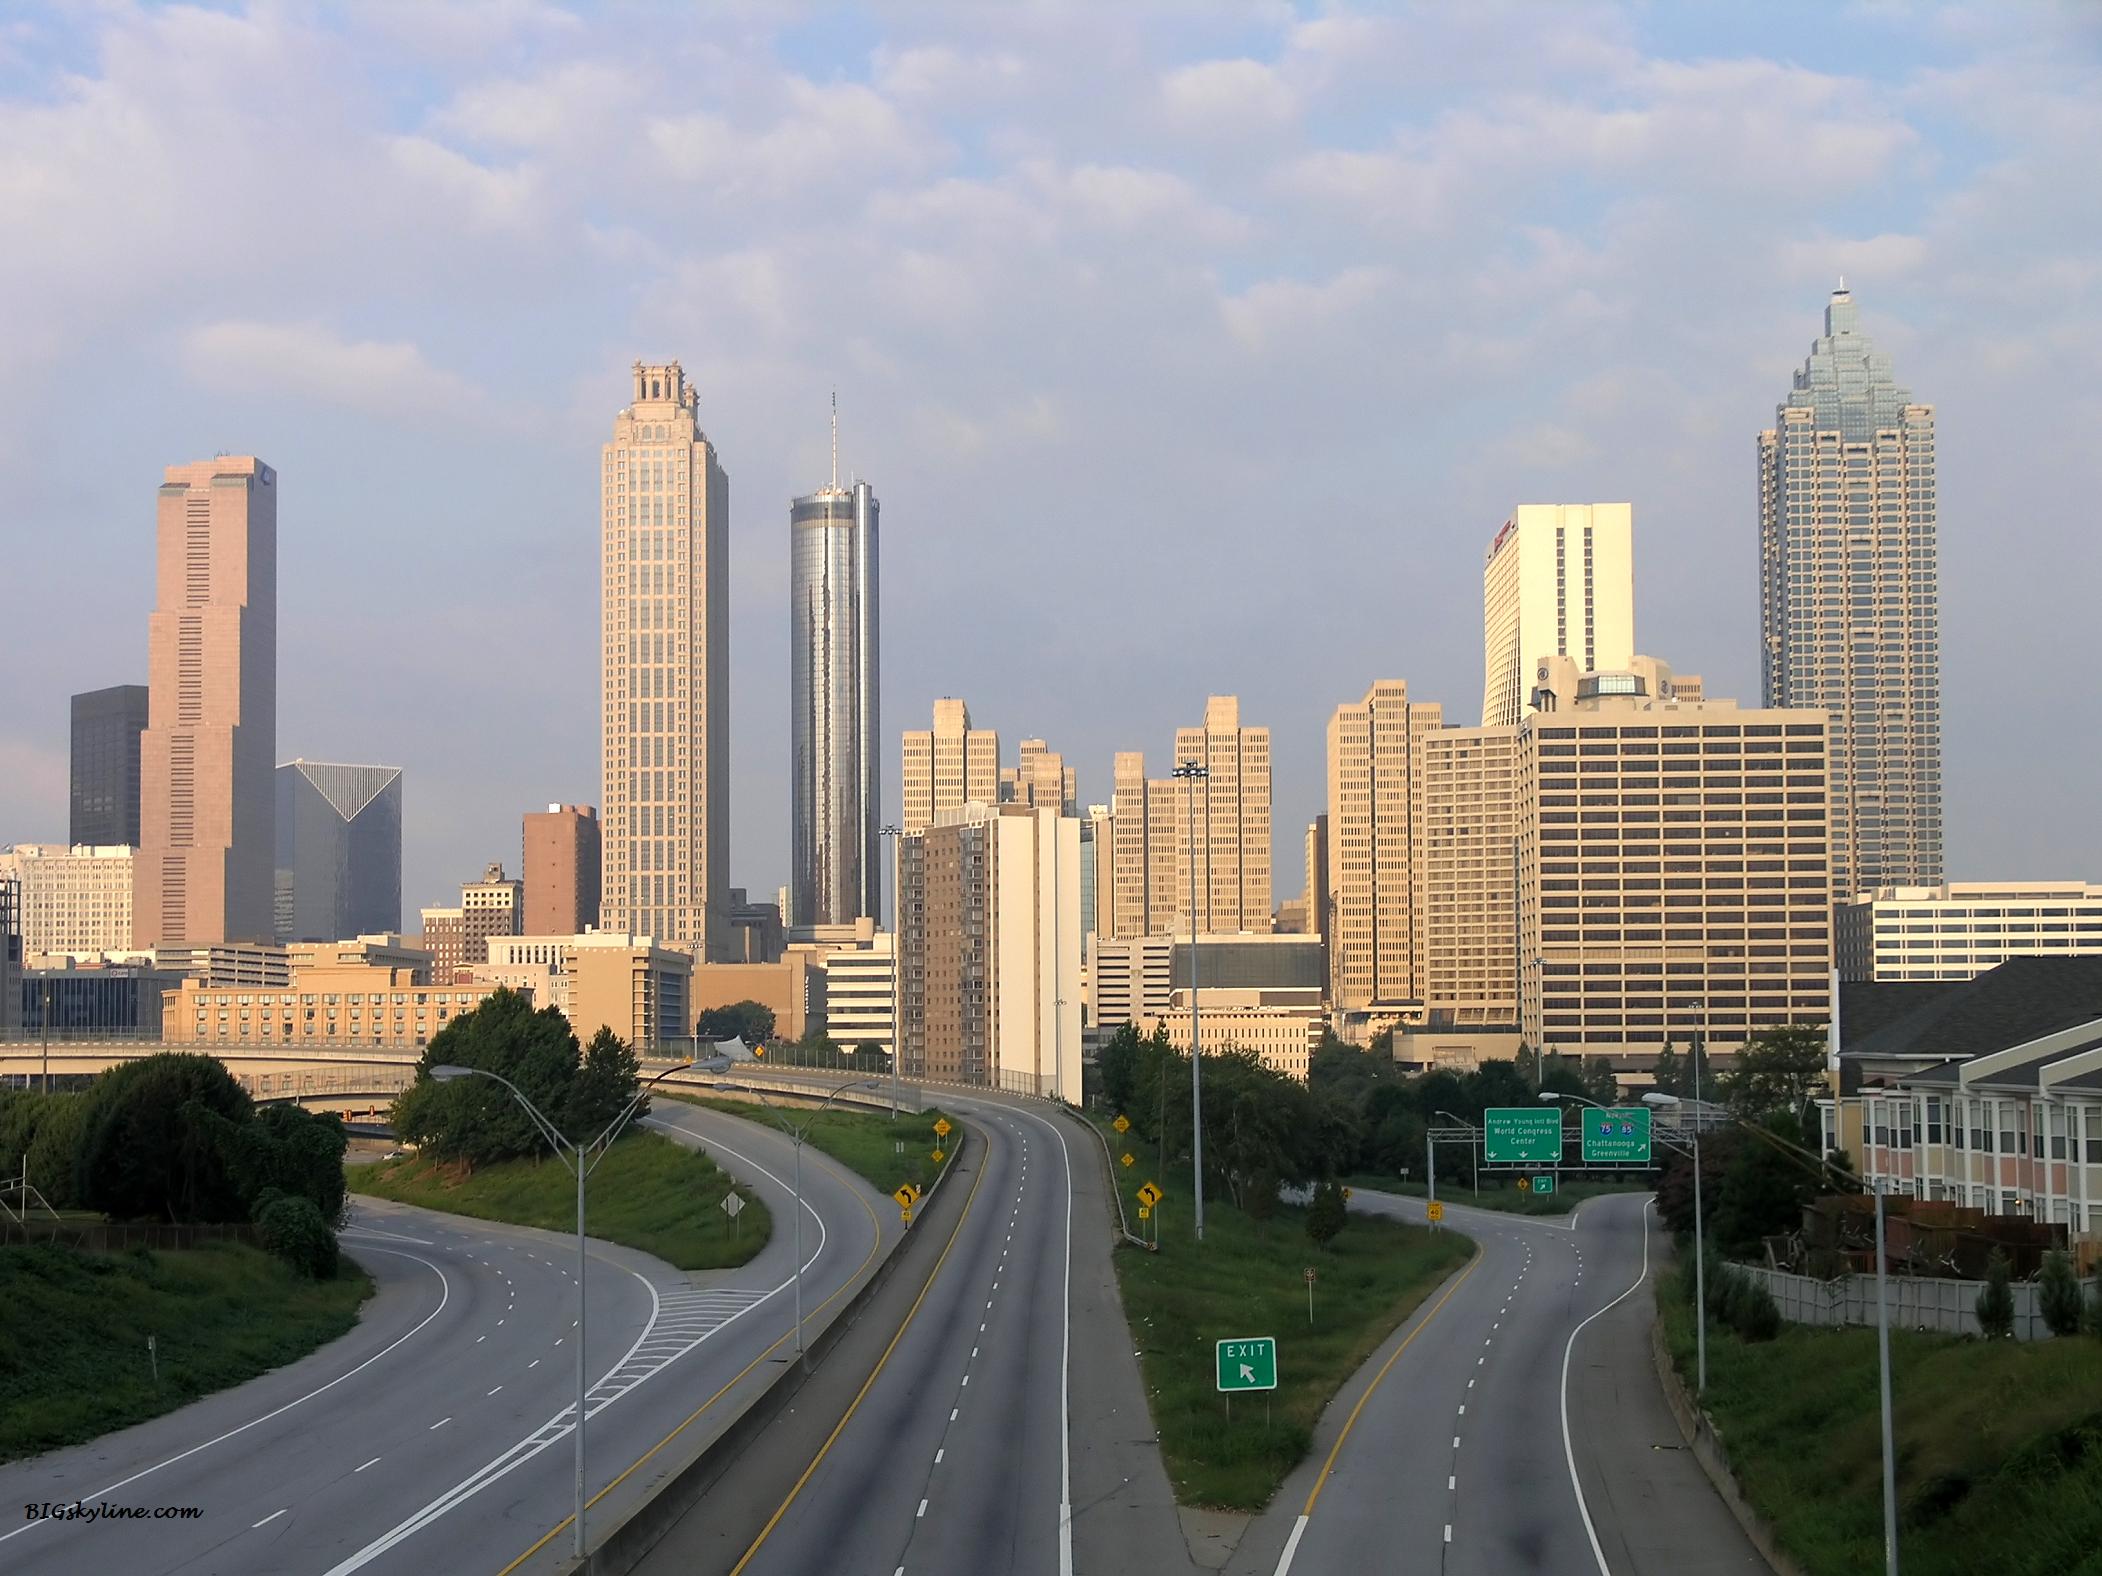 Atlanta skyline in Georgia, United States of America